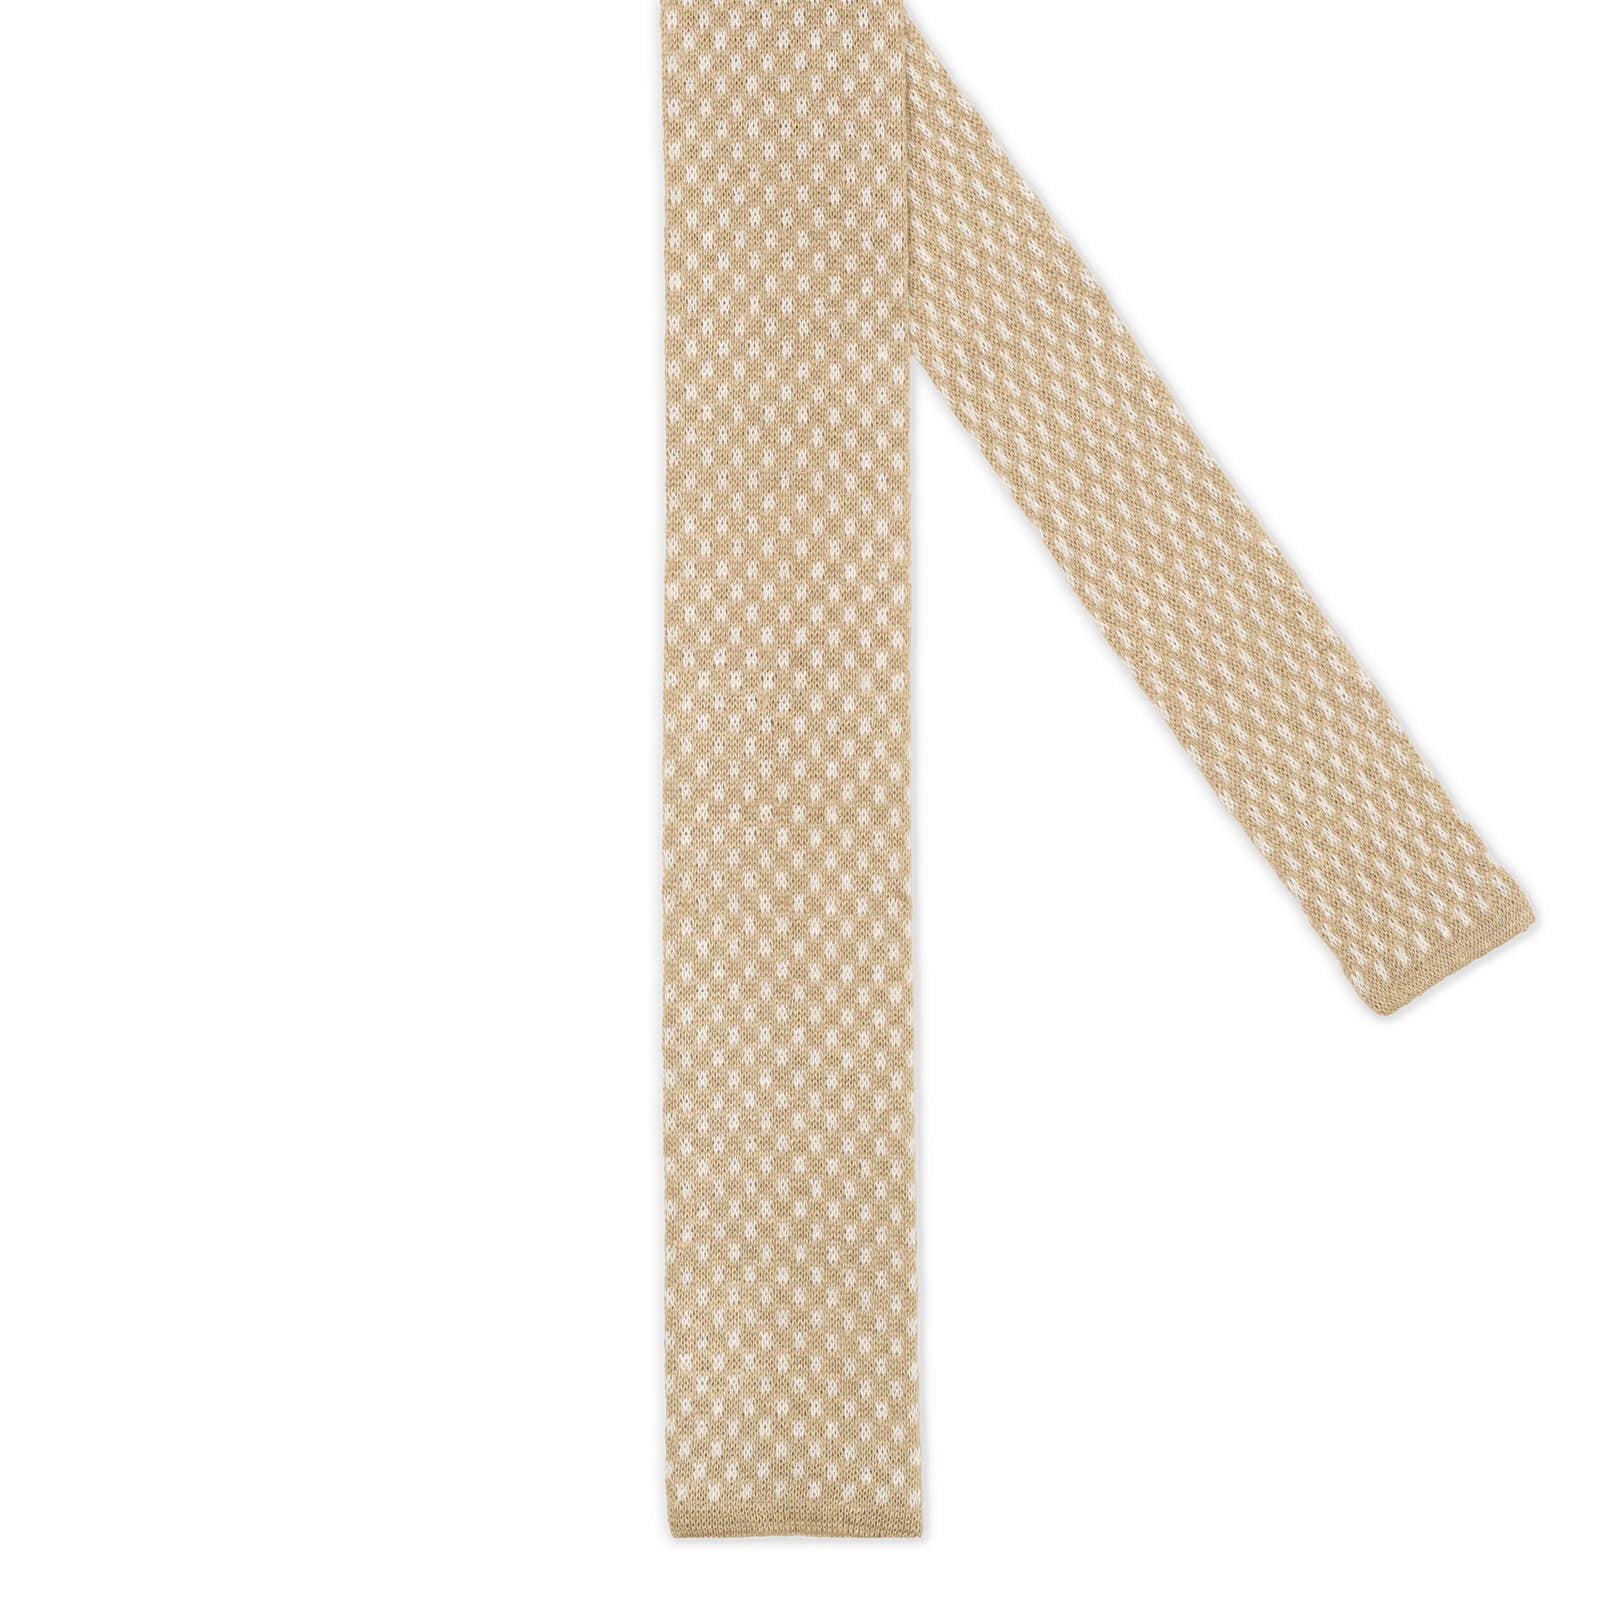 MATTABISCH FOR VANNUCCI Tan Dotted Linen Knit Tie NEW